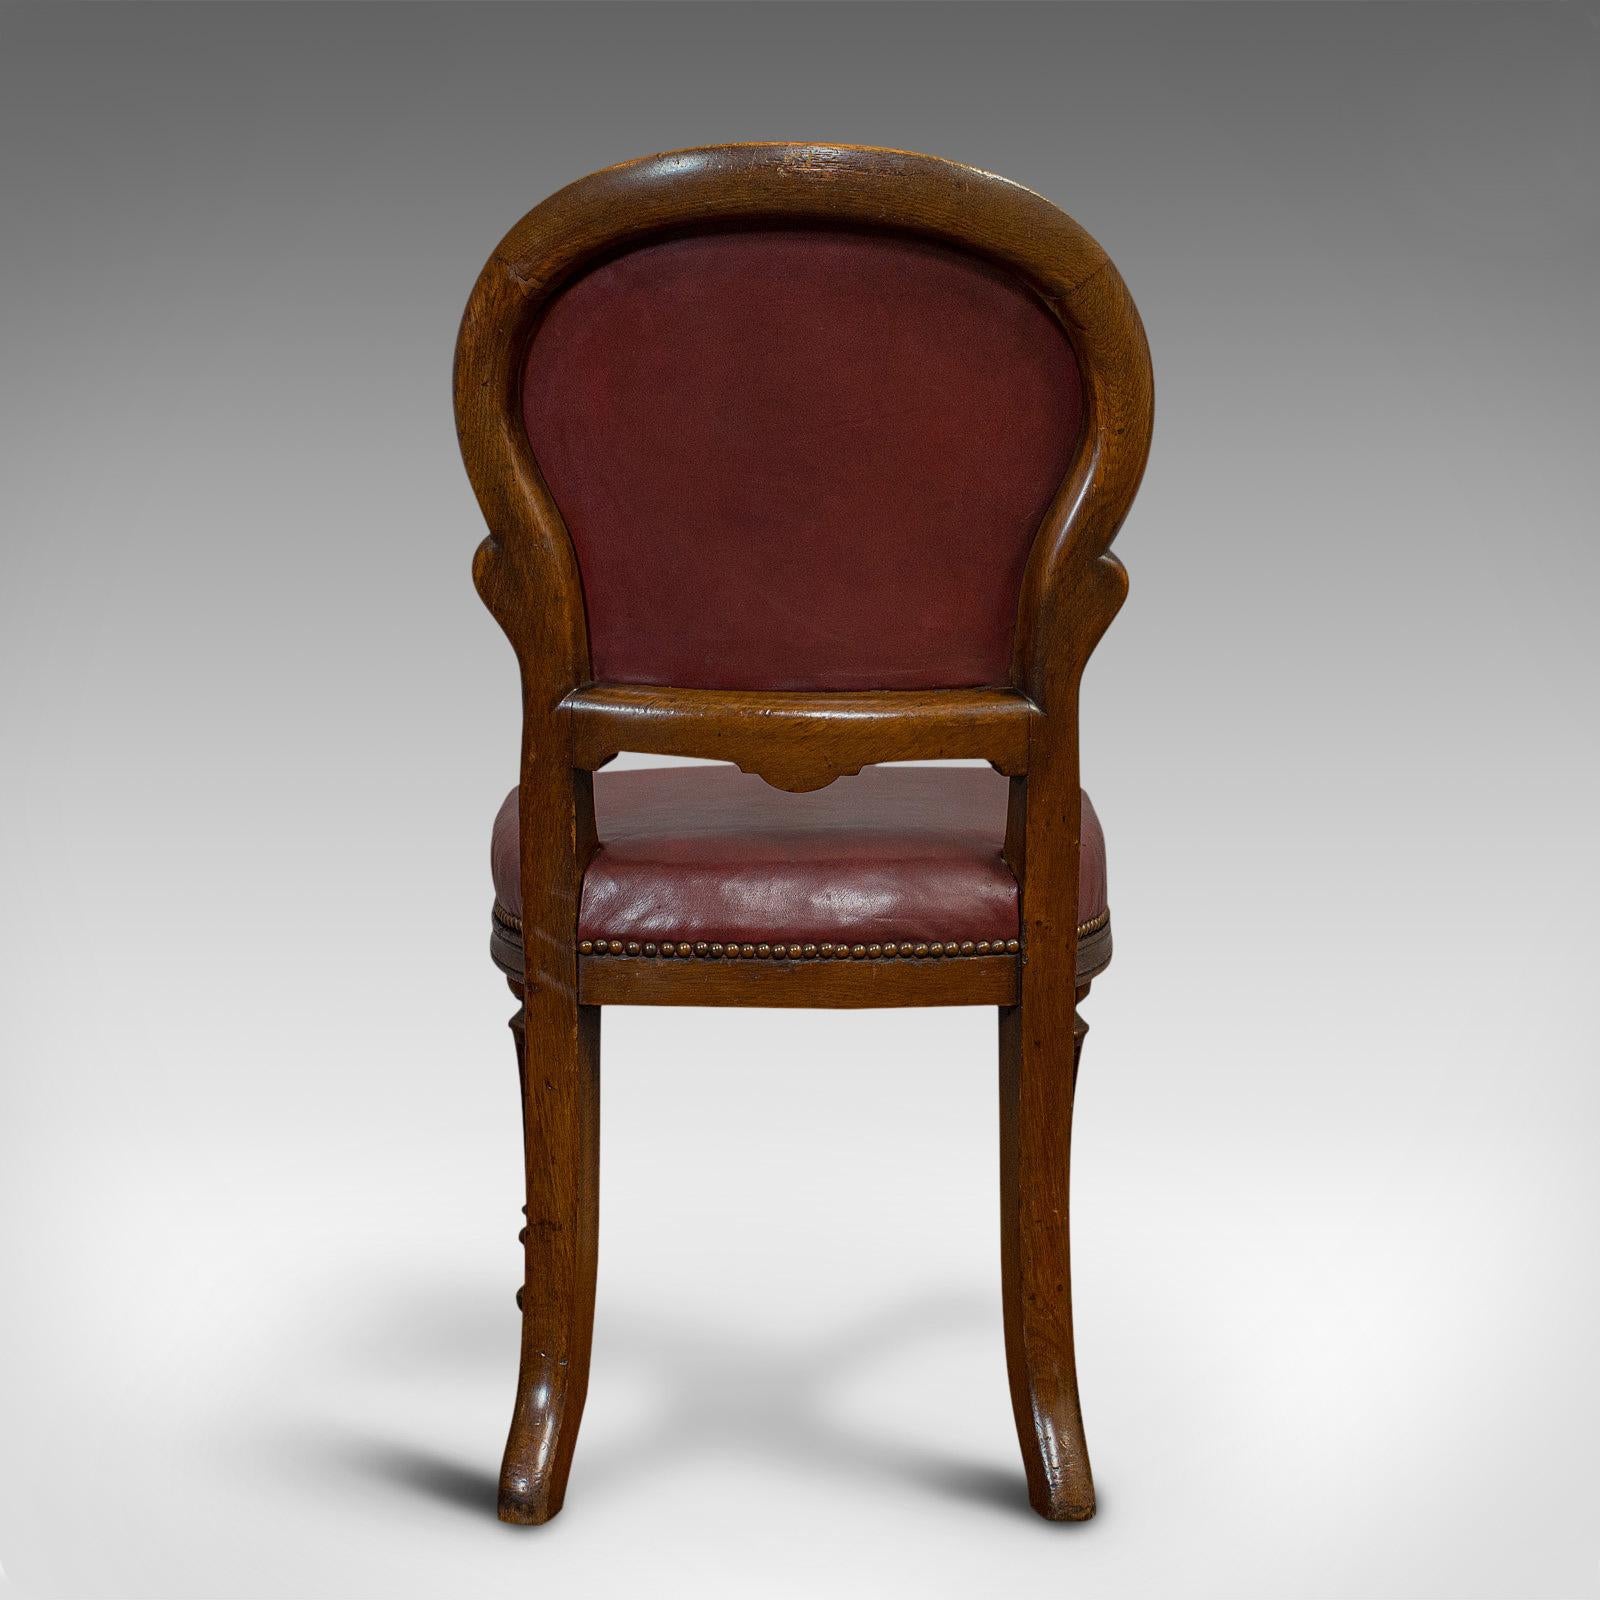 Pair of Antique Chairs, Walnut, Leather, Seat, Doveston, Bird & Hull, Victorian 1